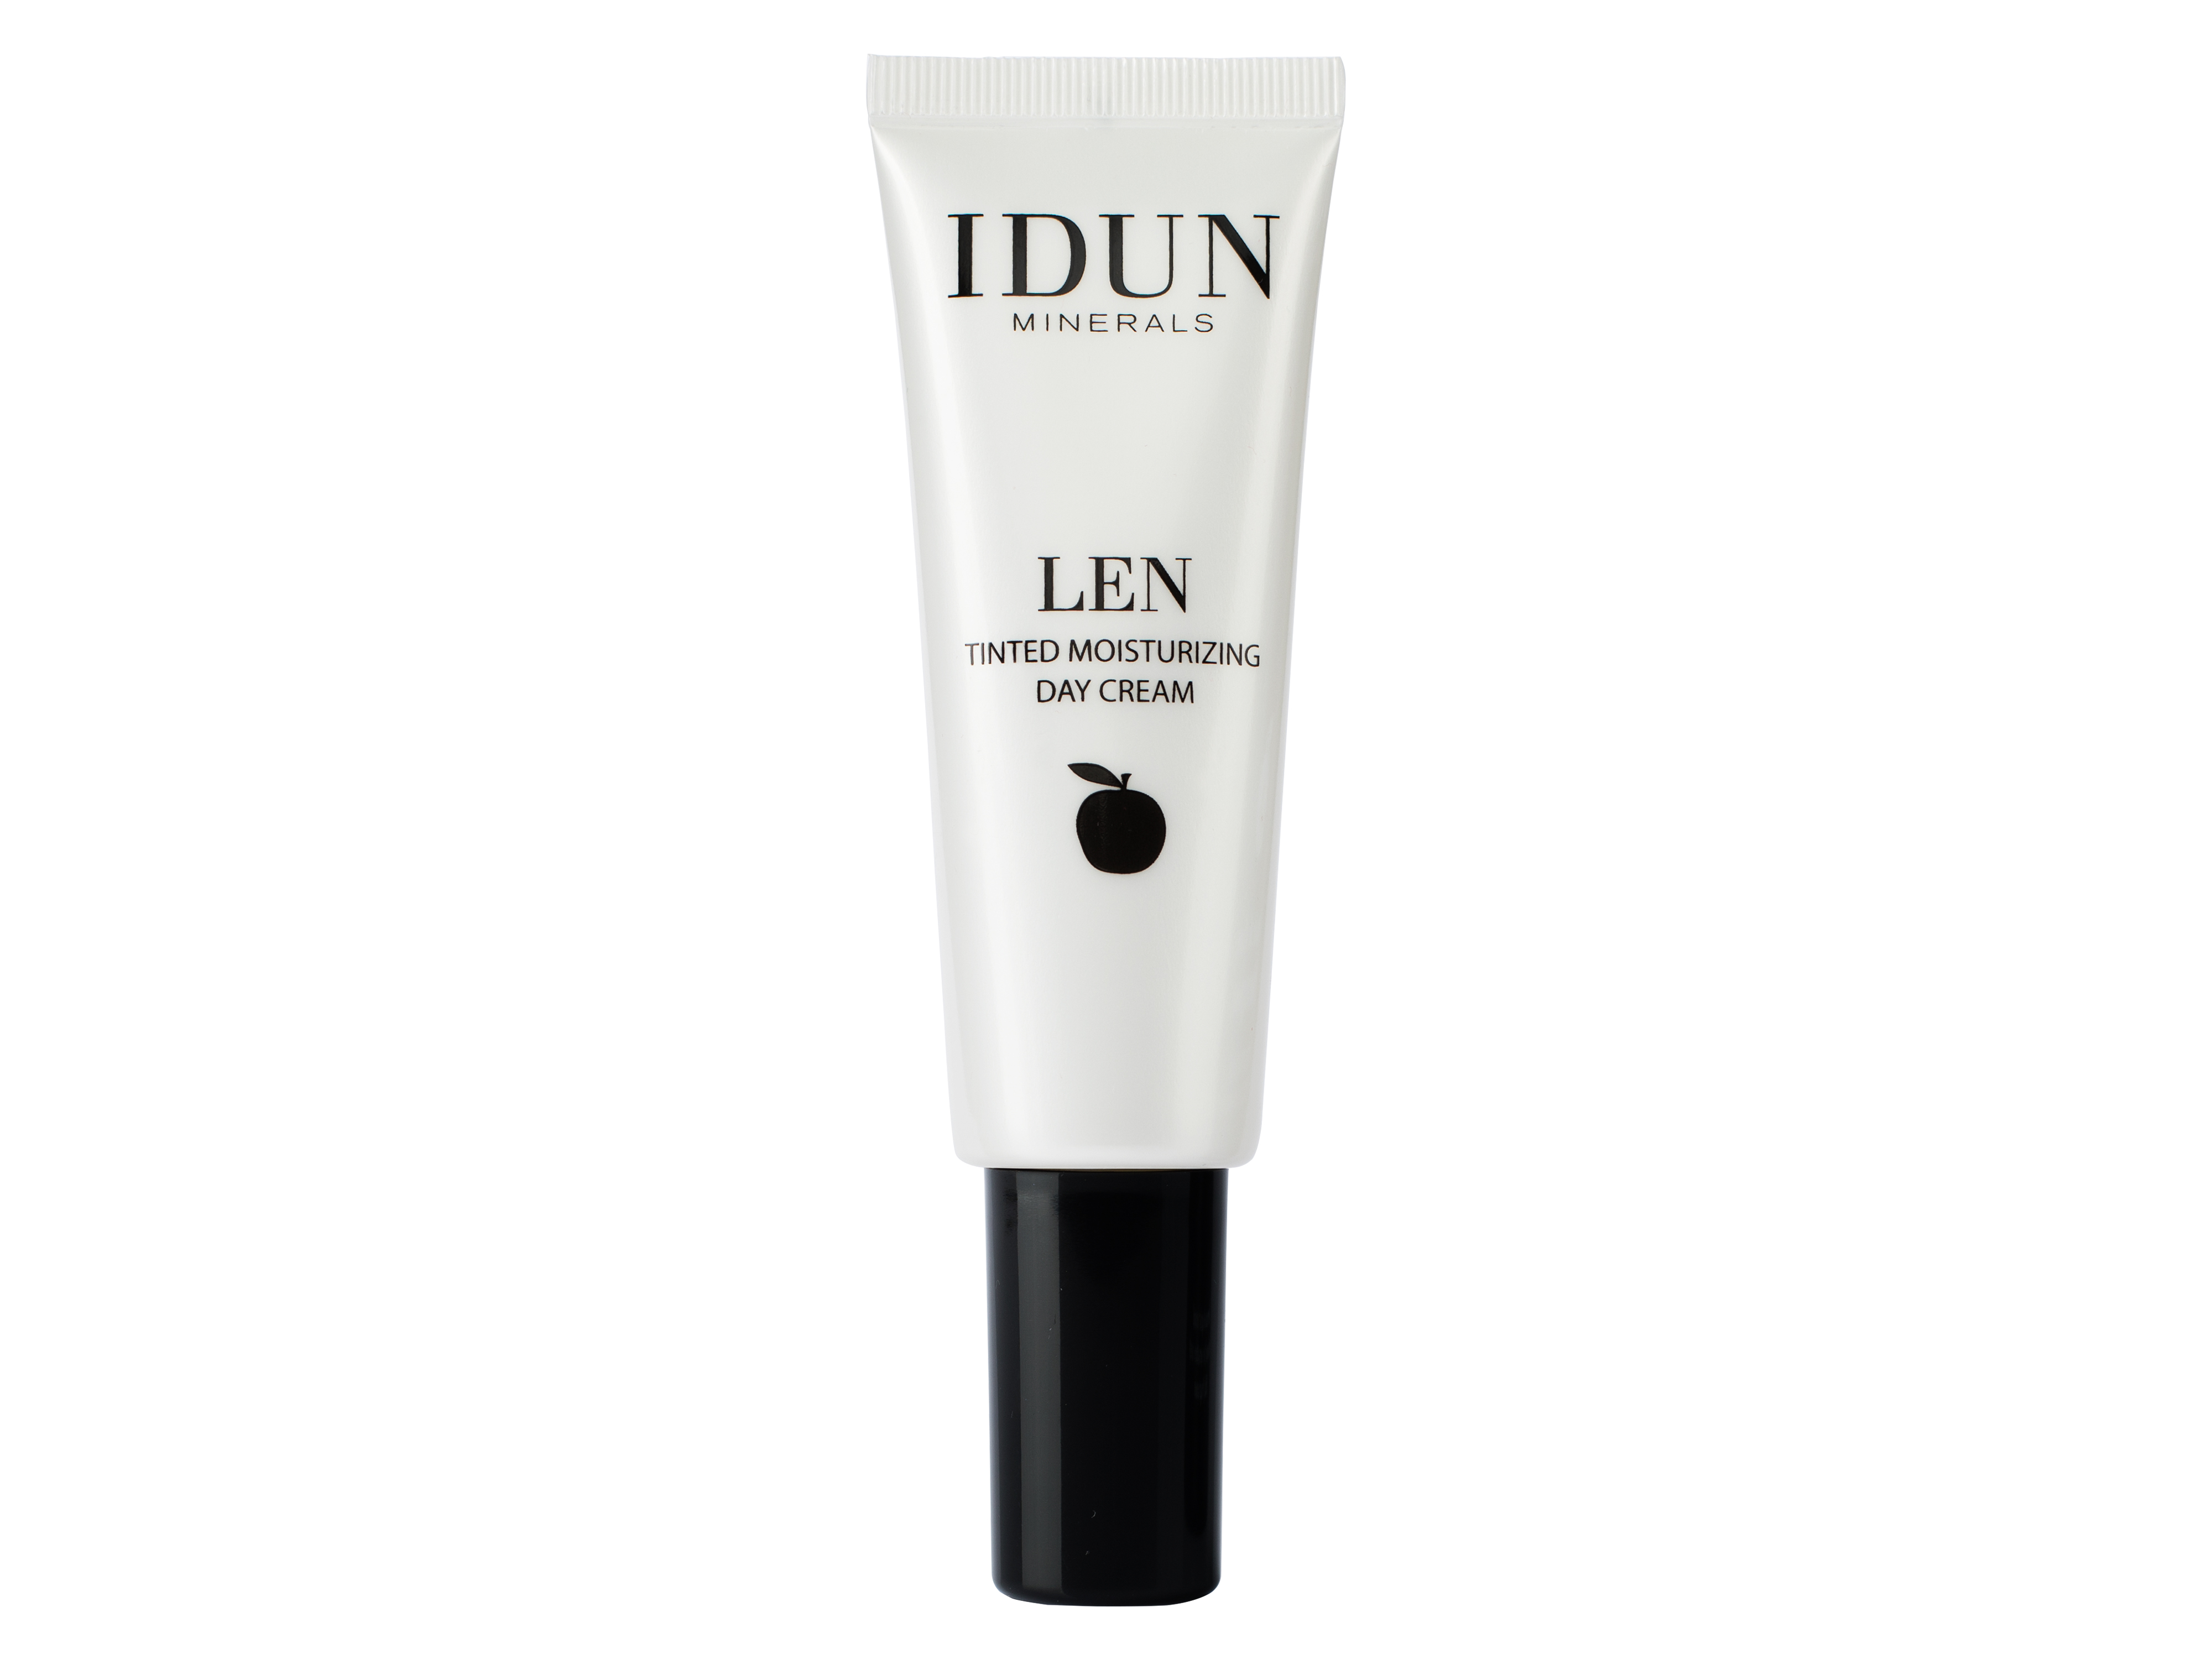 IDUN Minerals IDUNMinerals LEN Tinted Day Cream Tan, 50 ml